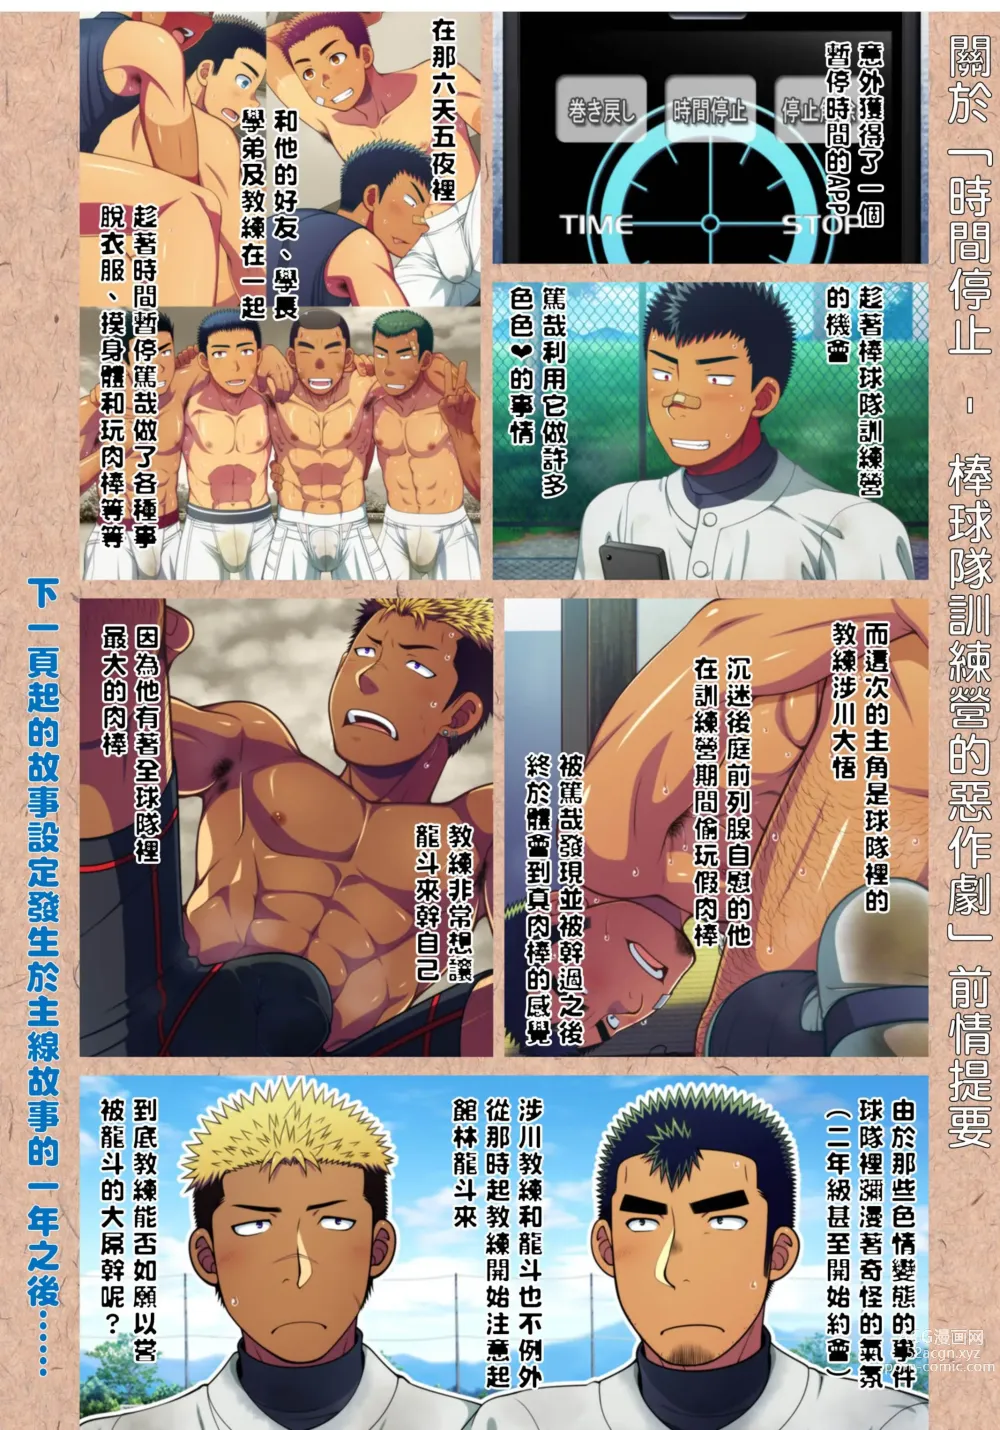 Page 3 of doujinshi 童貞教練暗戀著棒球隊隊員無法自拔著迷於他的大肉棒!